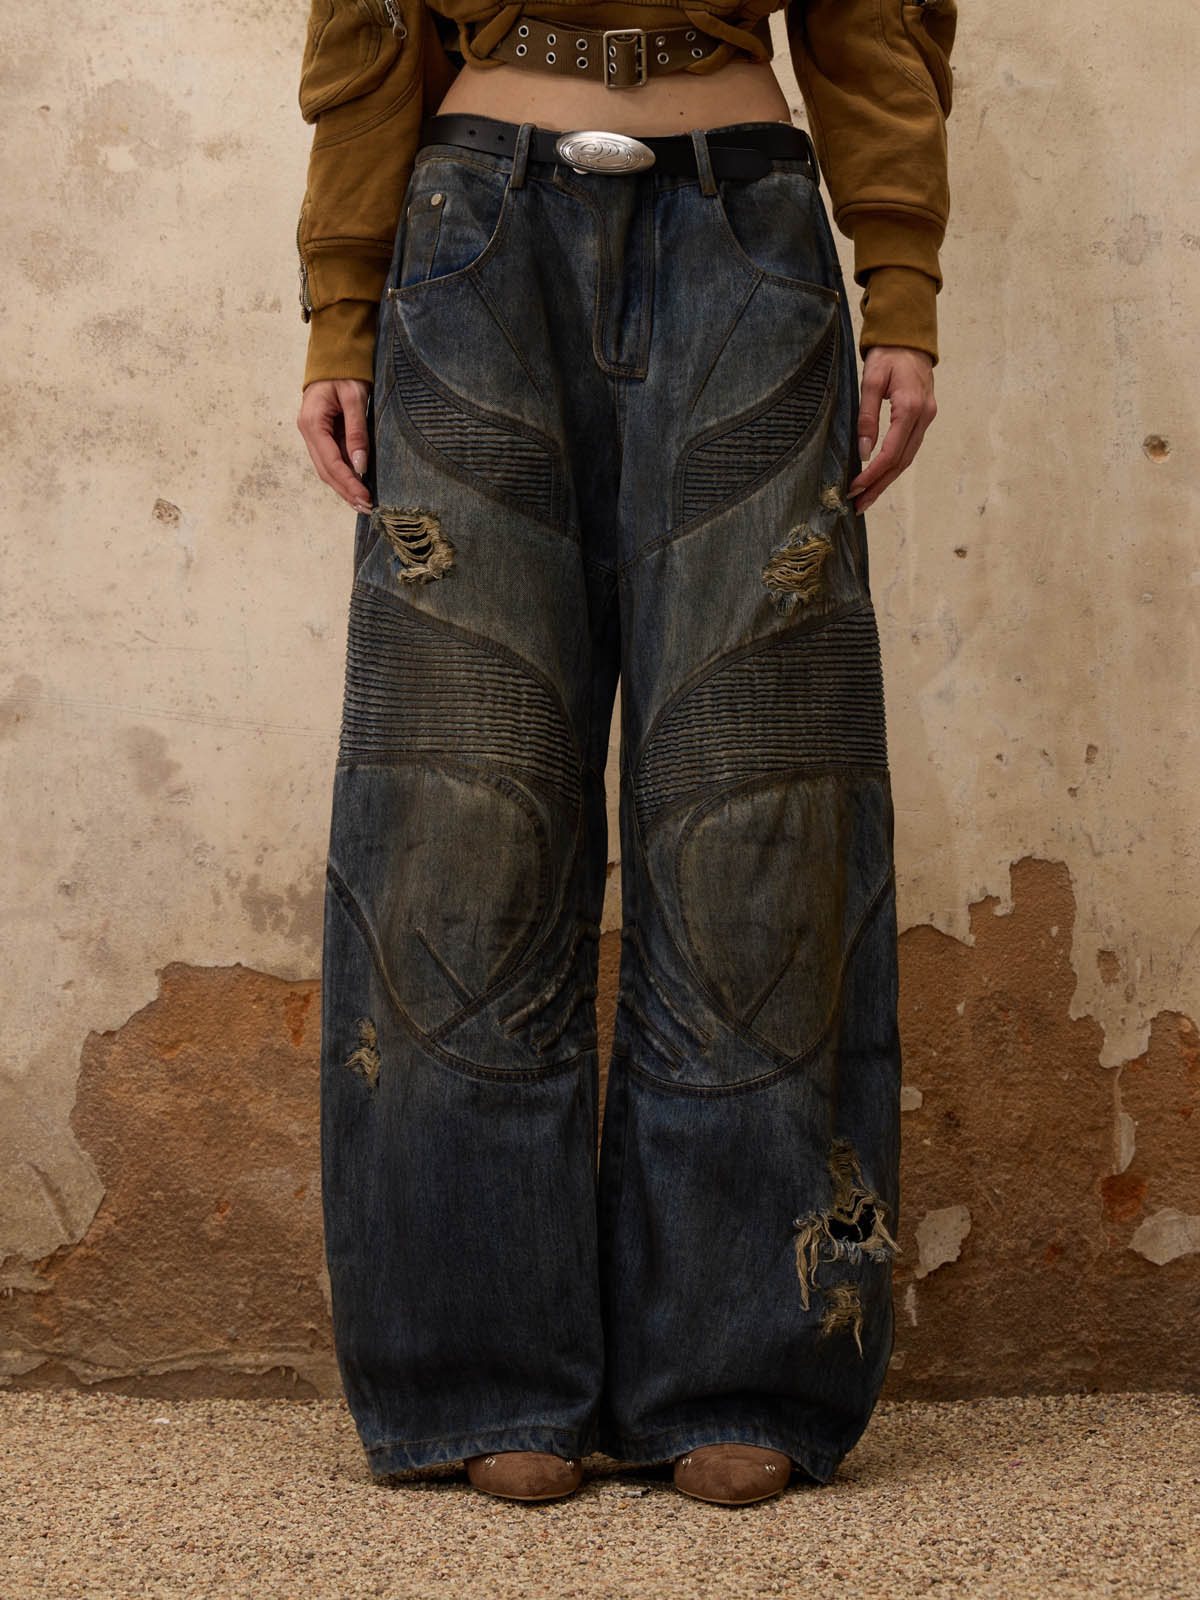 Personsoul Patchwork Leather Denim Jeans